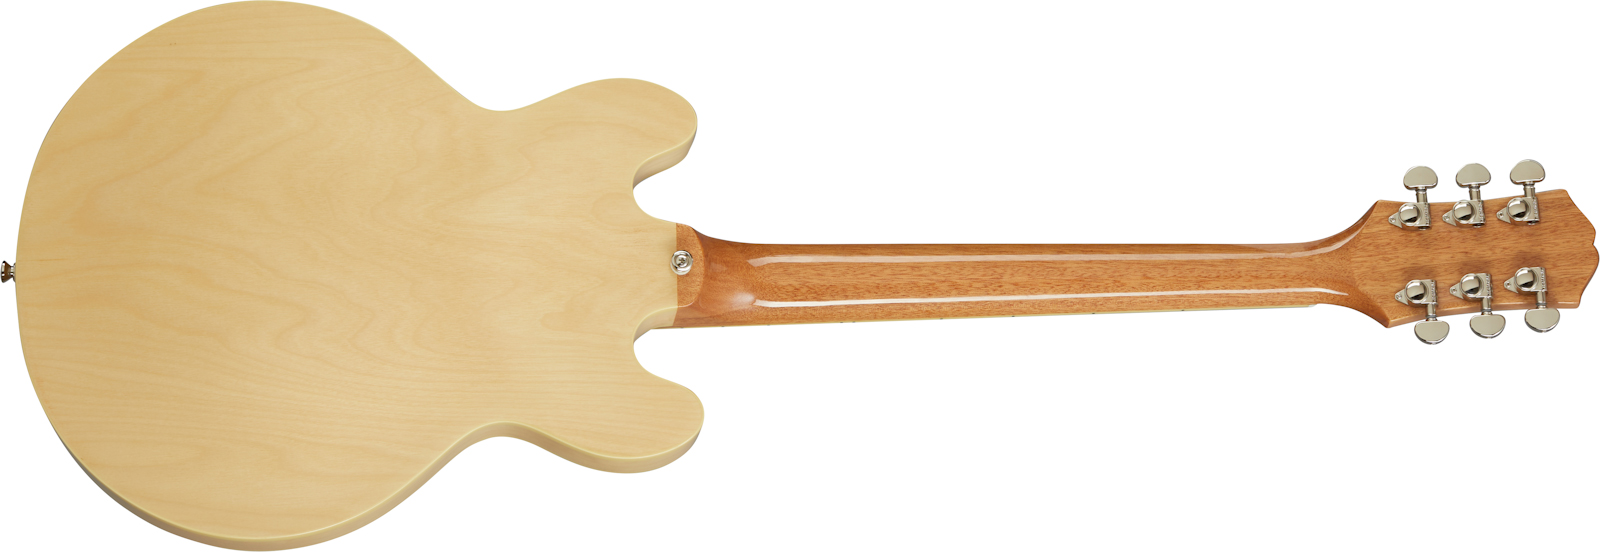 Epiphone Es-339 Inspired By Gibson 2020 2h Ht Rw - Natural - Semi hollow elektriche gitaar - Variation 1